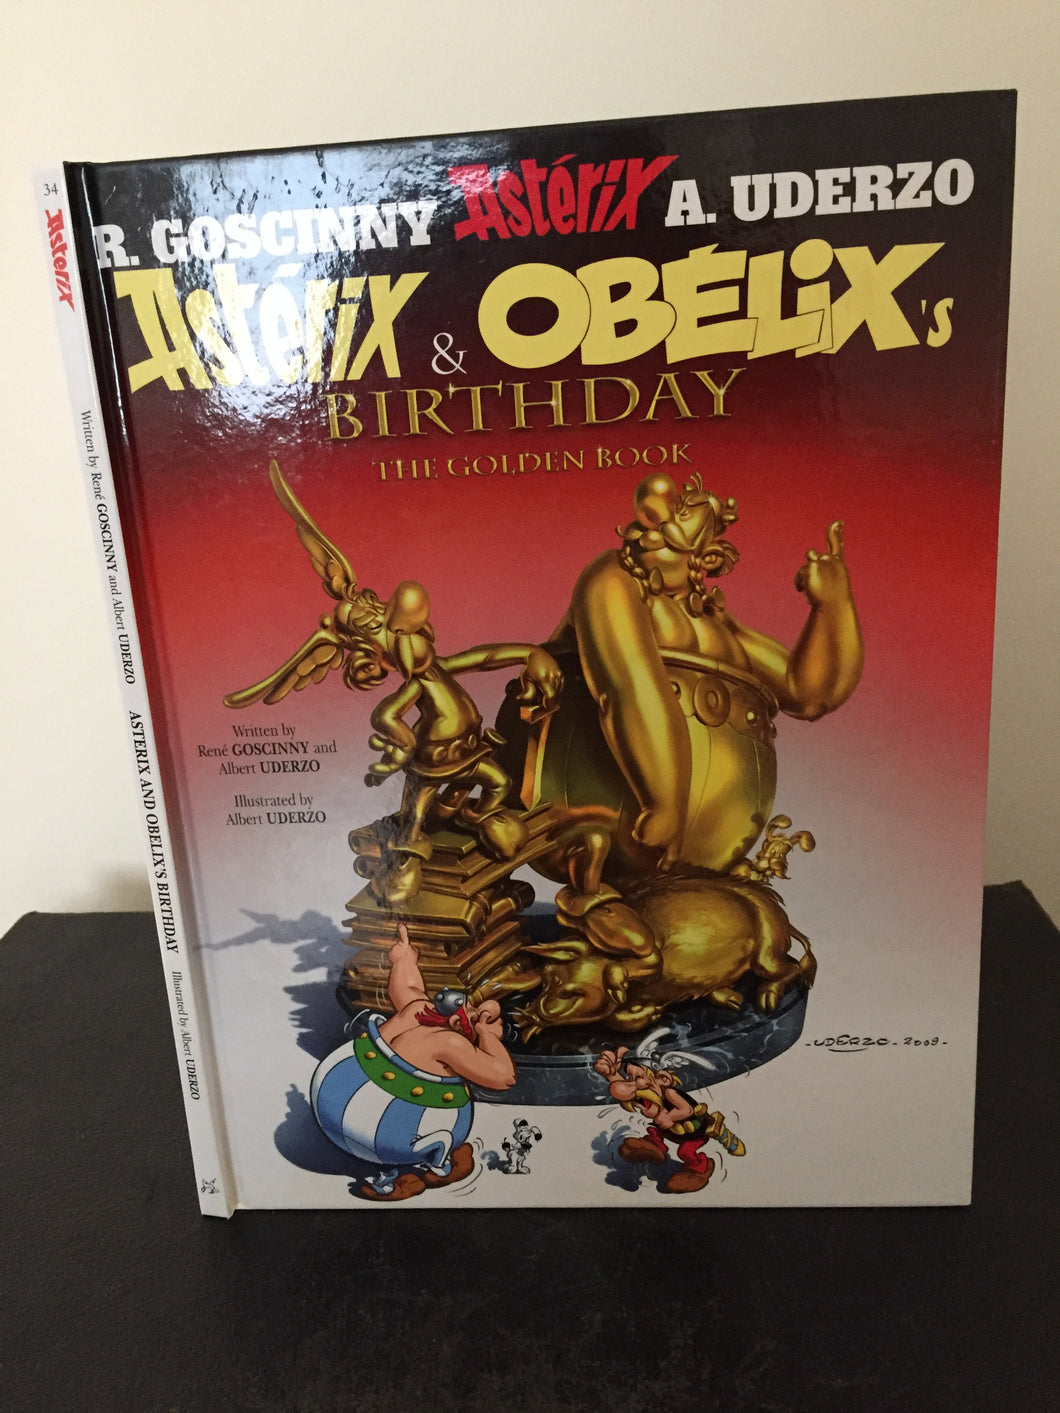 Asterix & Obelix’s Birthday. The Golden Book